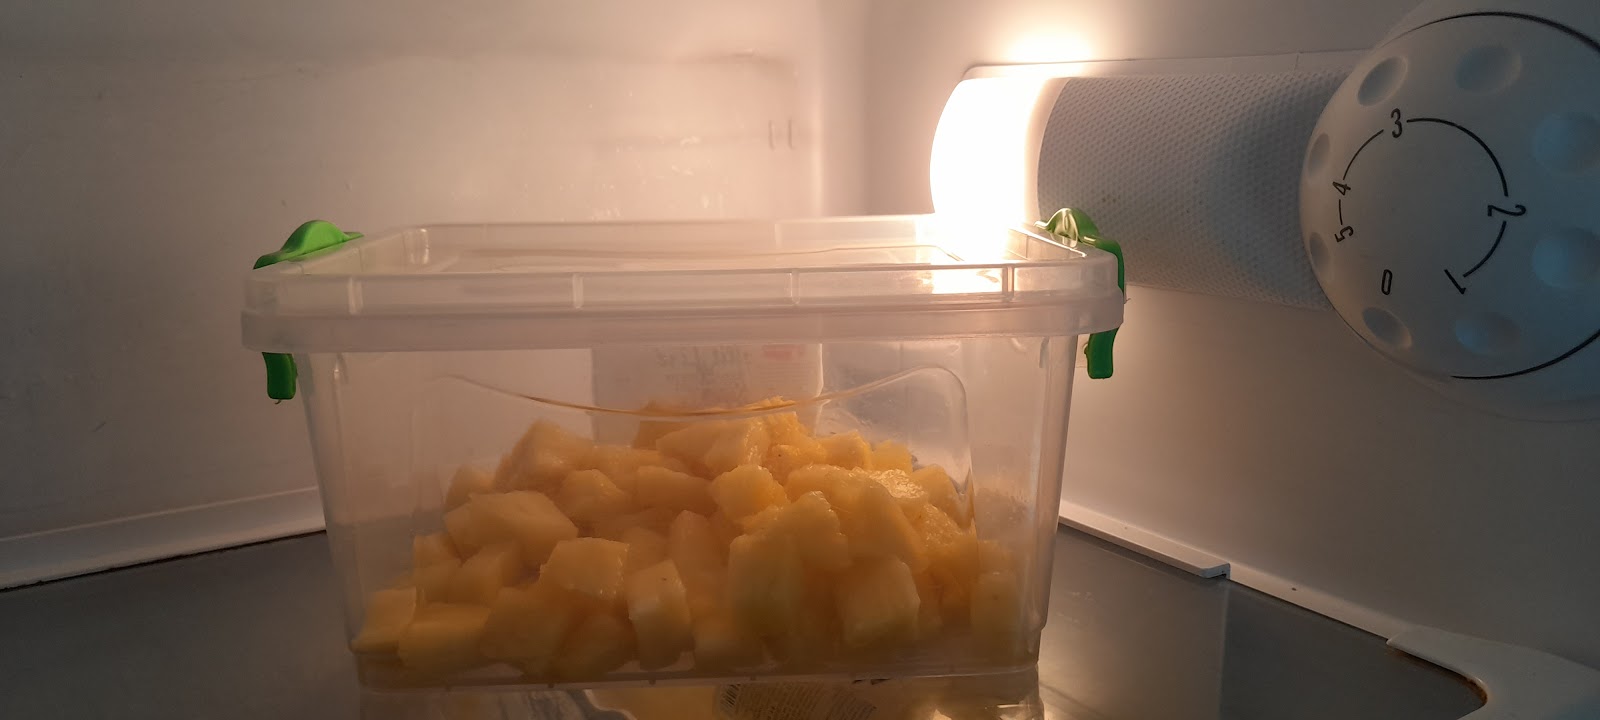 Pineapple pieces in the fridge.